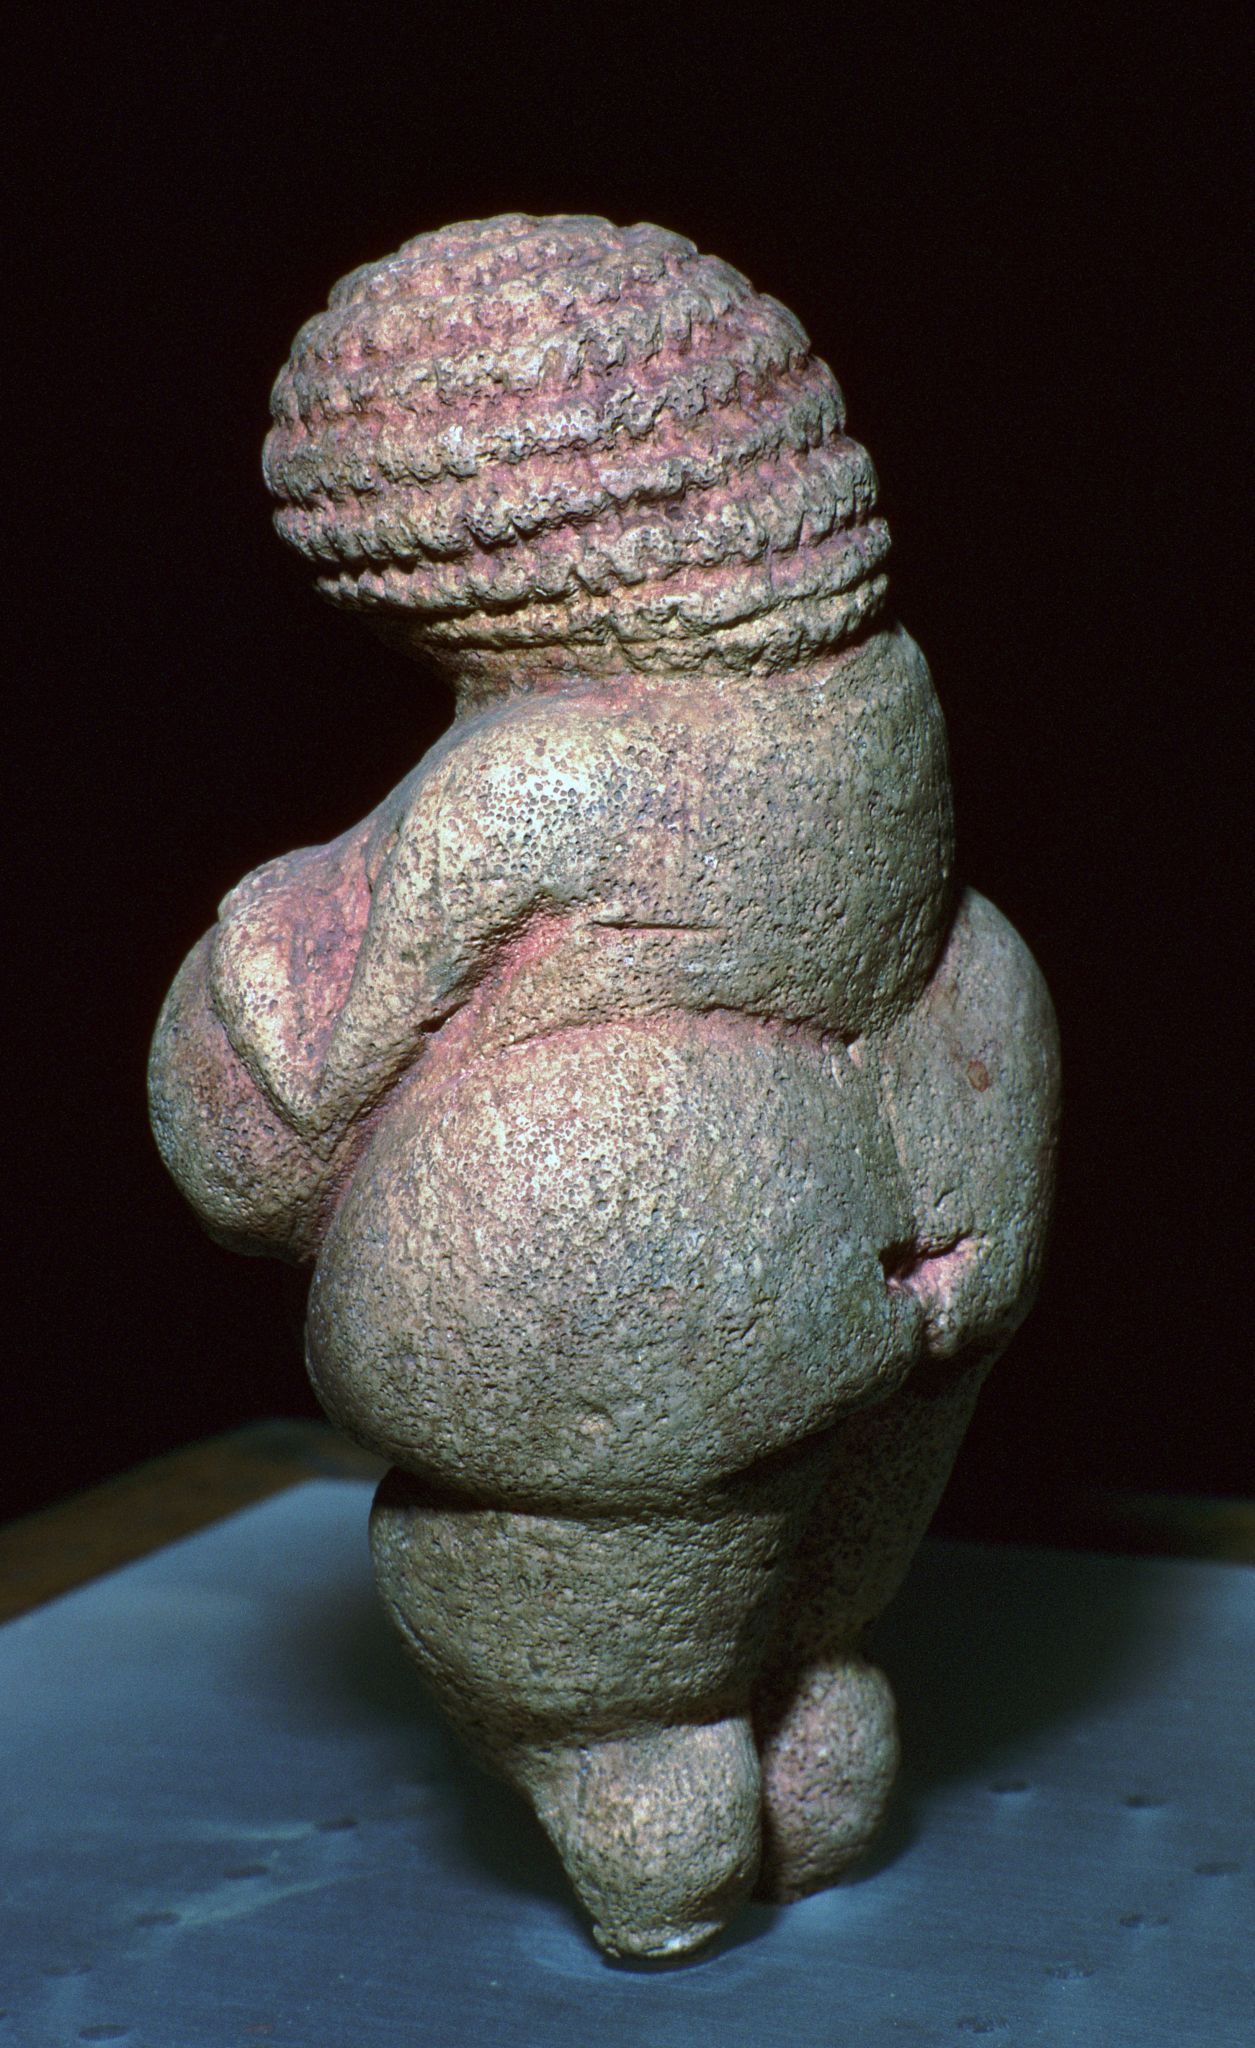 Is Facebook Nude Shaming The Venus Of Willendorf